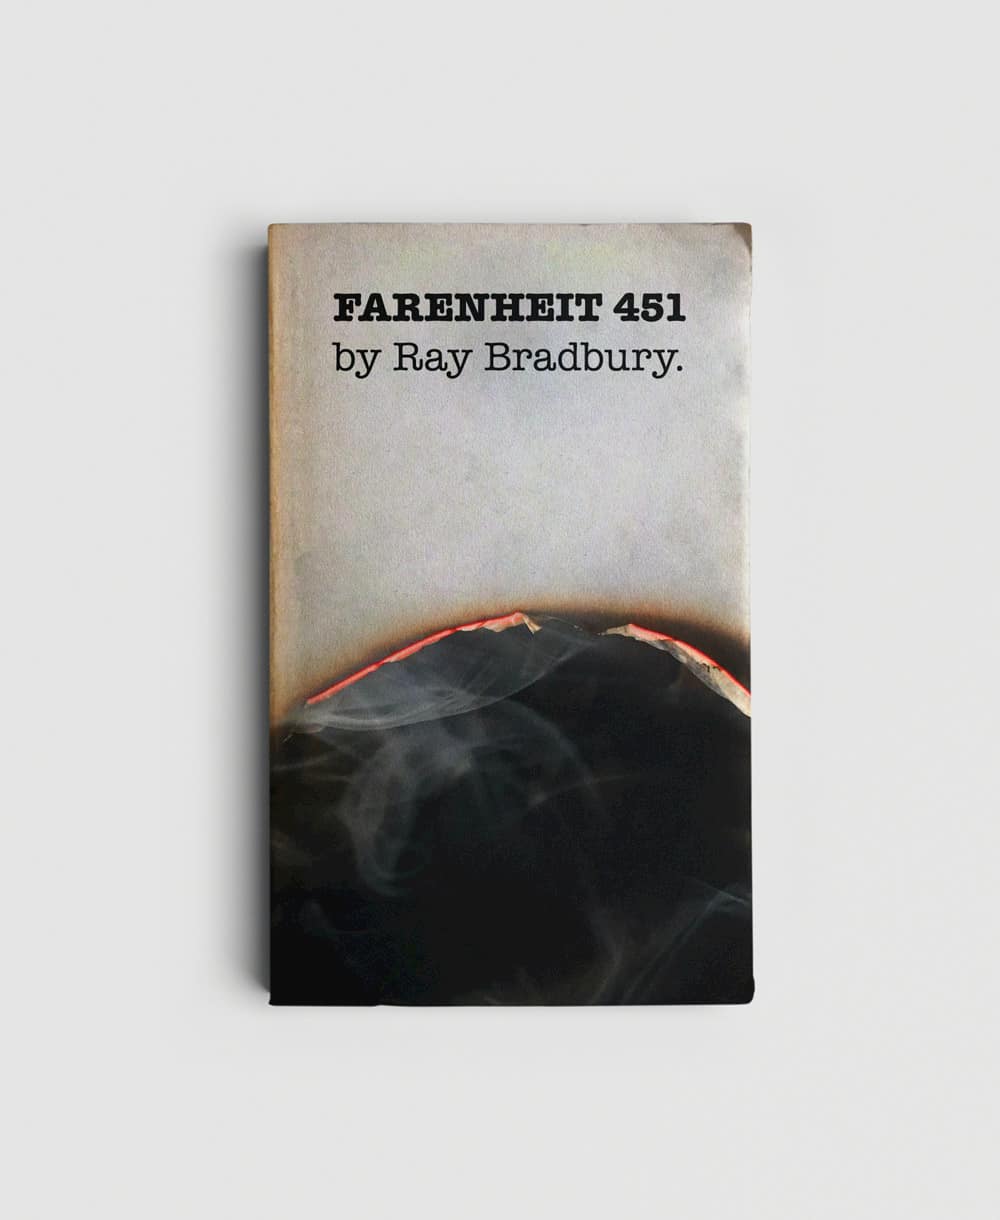 Farenheit 451 book cover design